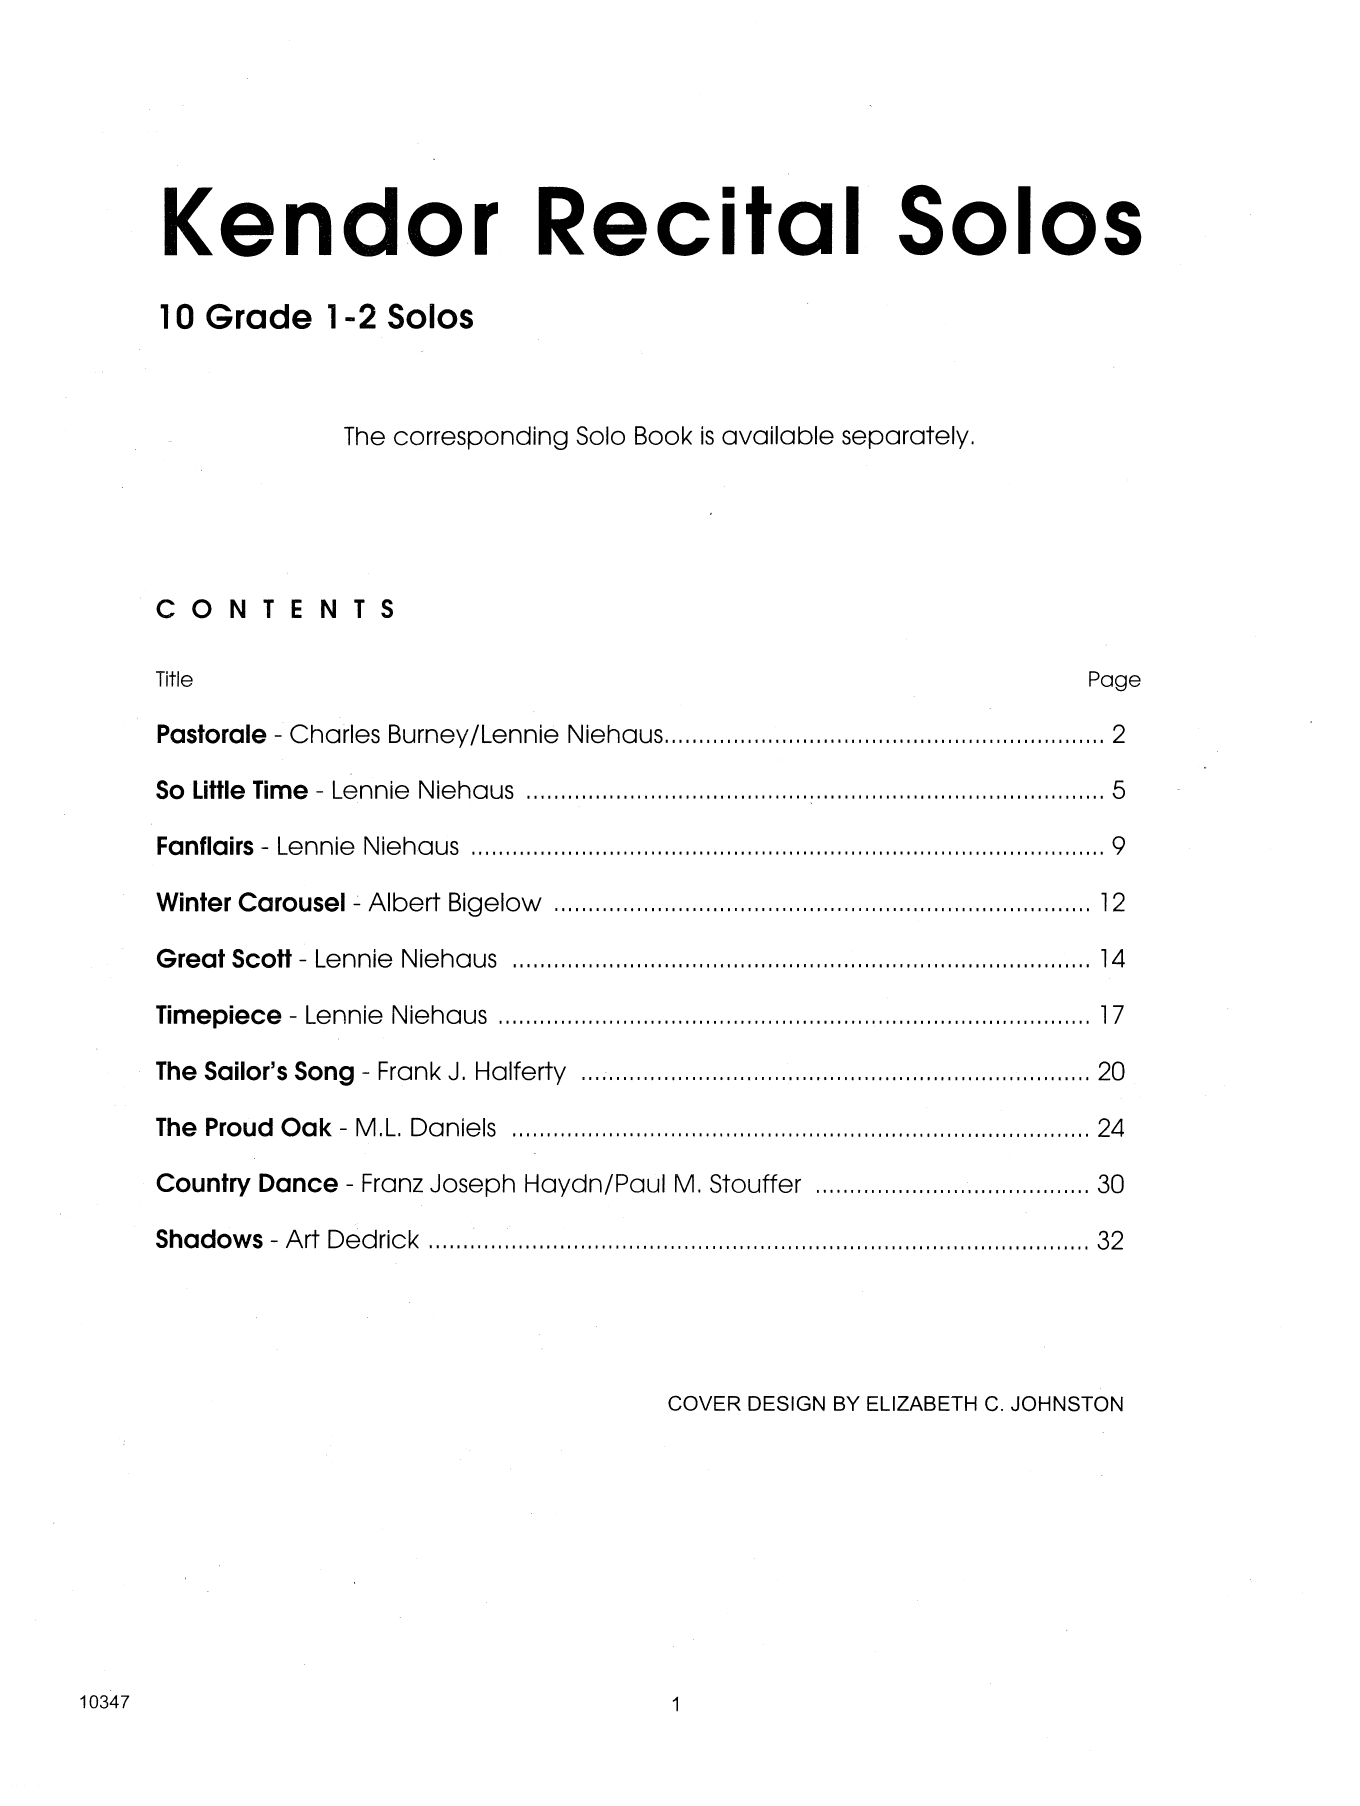 Download Various Kendor Recital Solos - Baritone - Piano Sheet Music